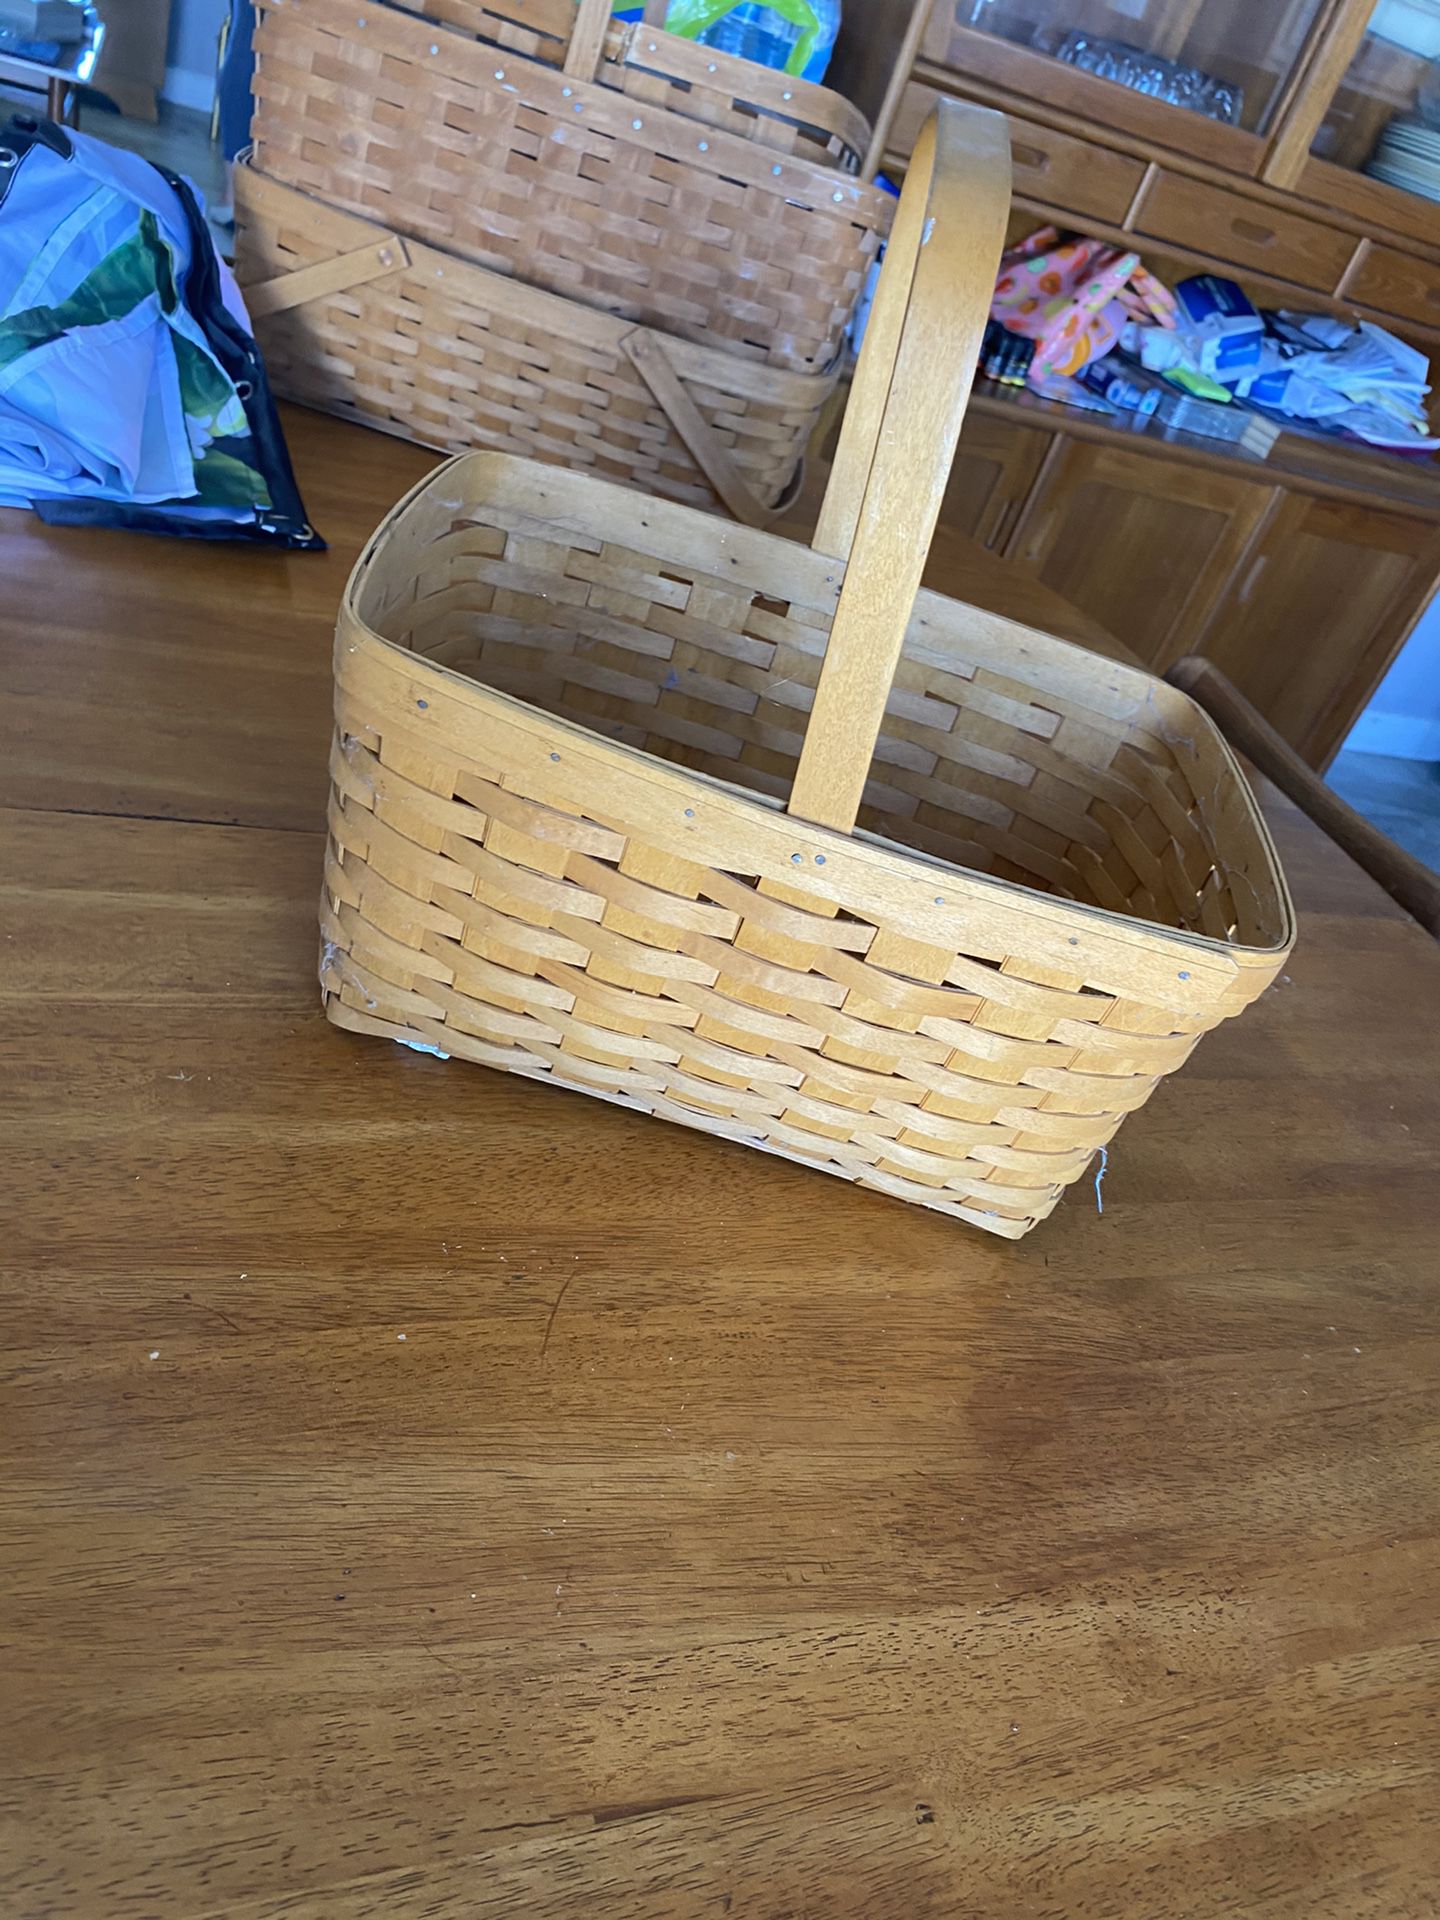 Large Longaberger Basket